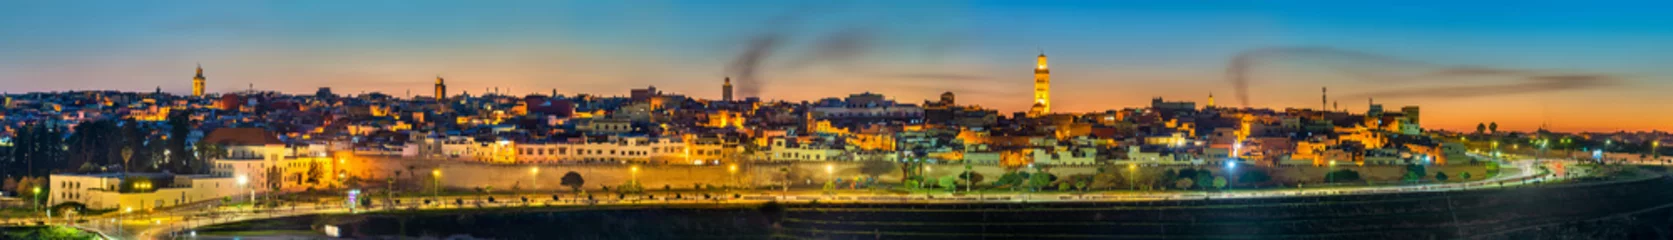 Zelfklevend Fotobehang Panorama van Meknes in de avond - Marokko © Leonid Andronov